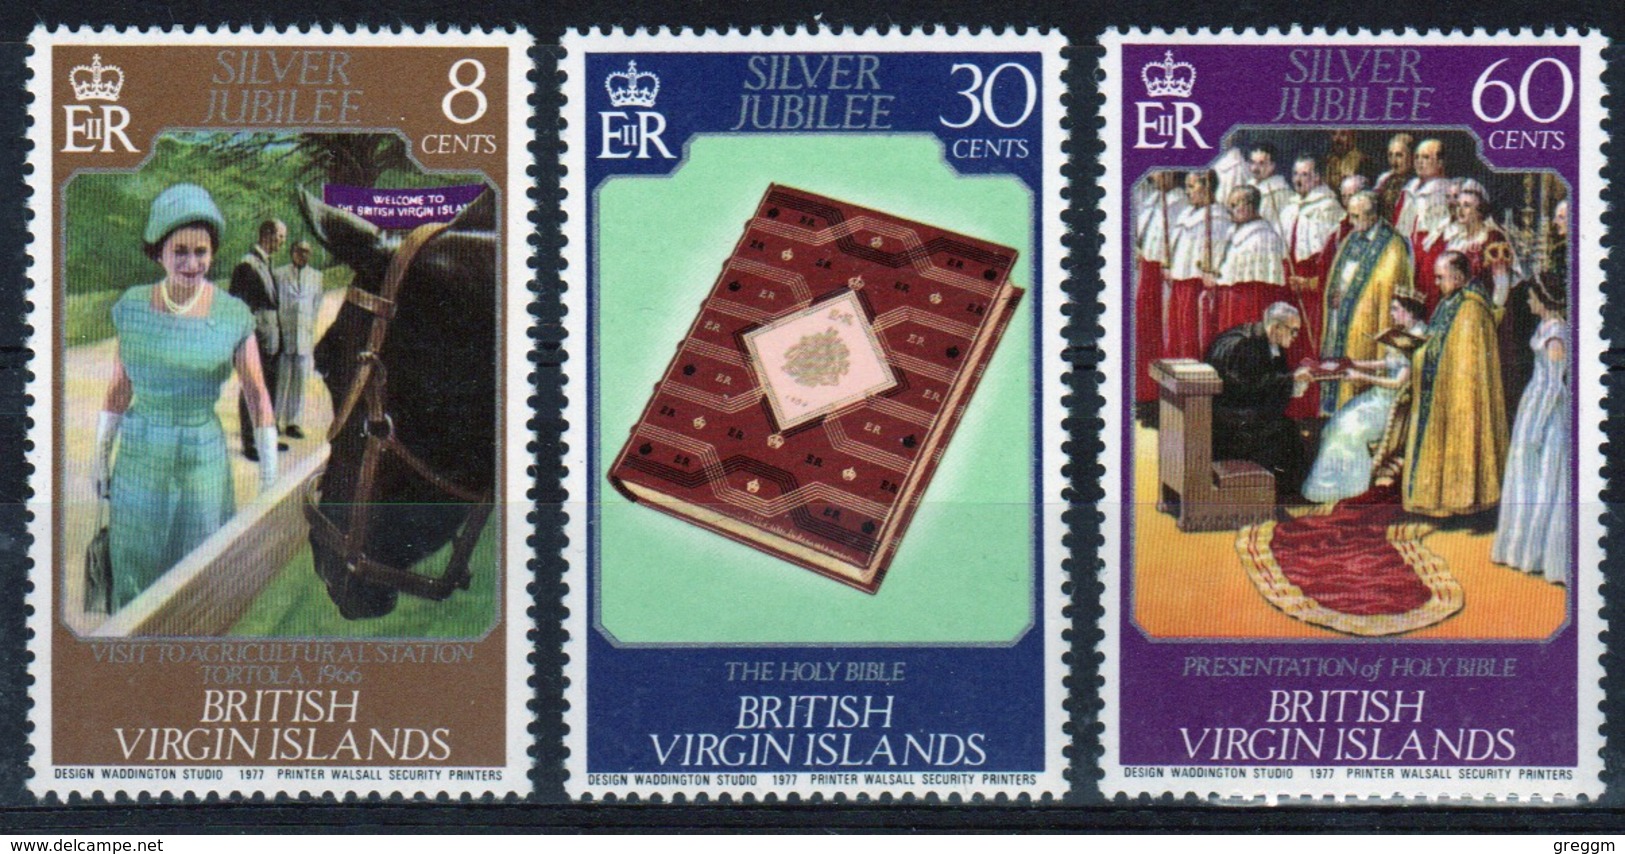 British Virgin Islands 1977 Queen Elizabeth Set Of Stamps Celebrating Silver Jubilee. - British Virgin Islands